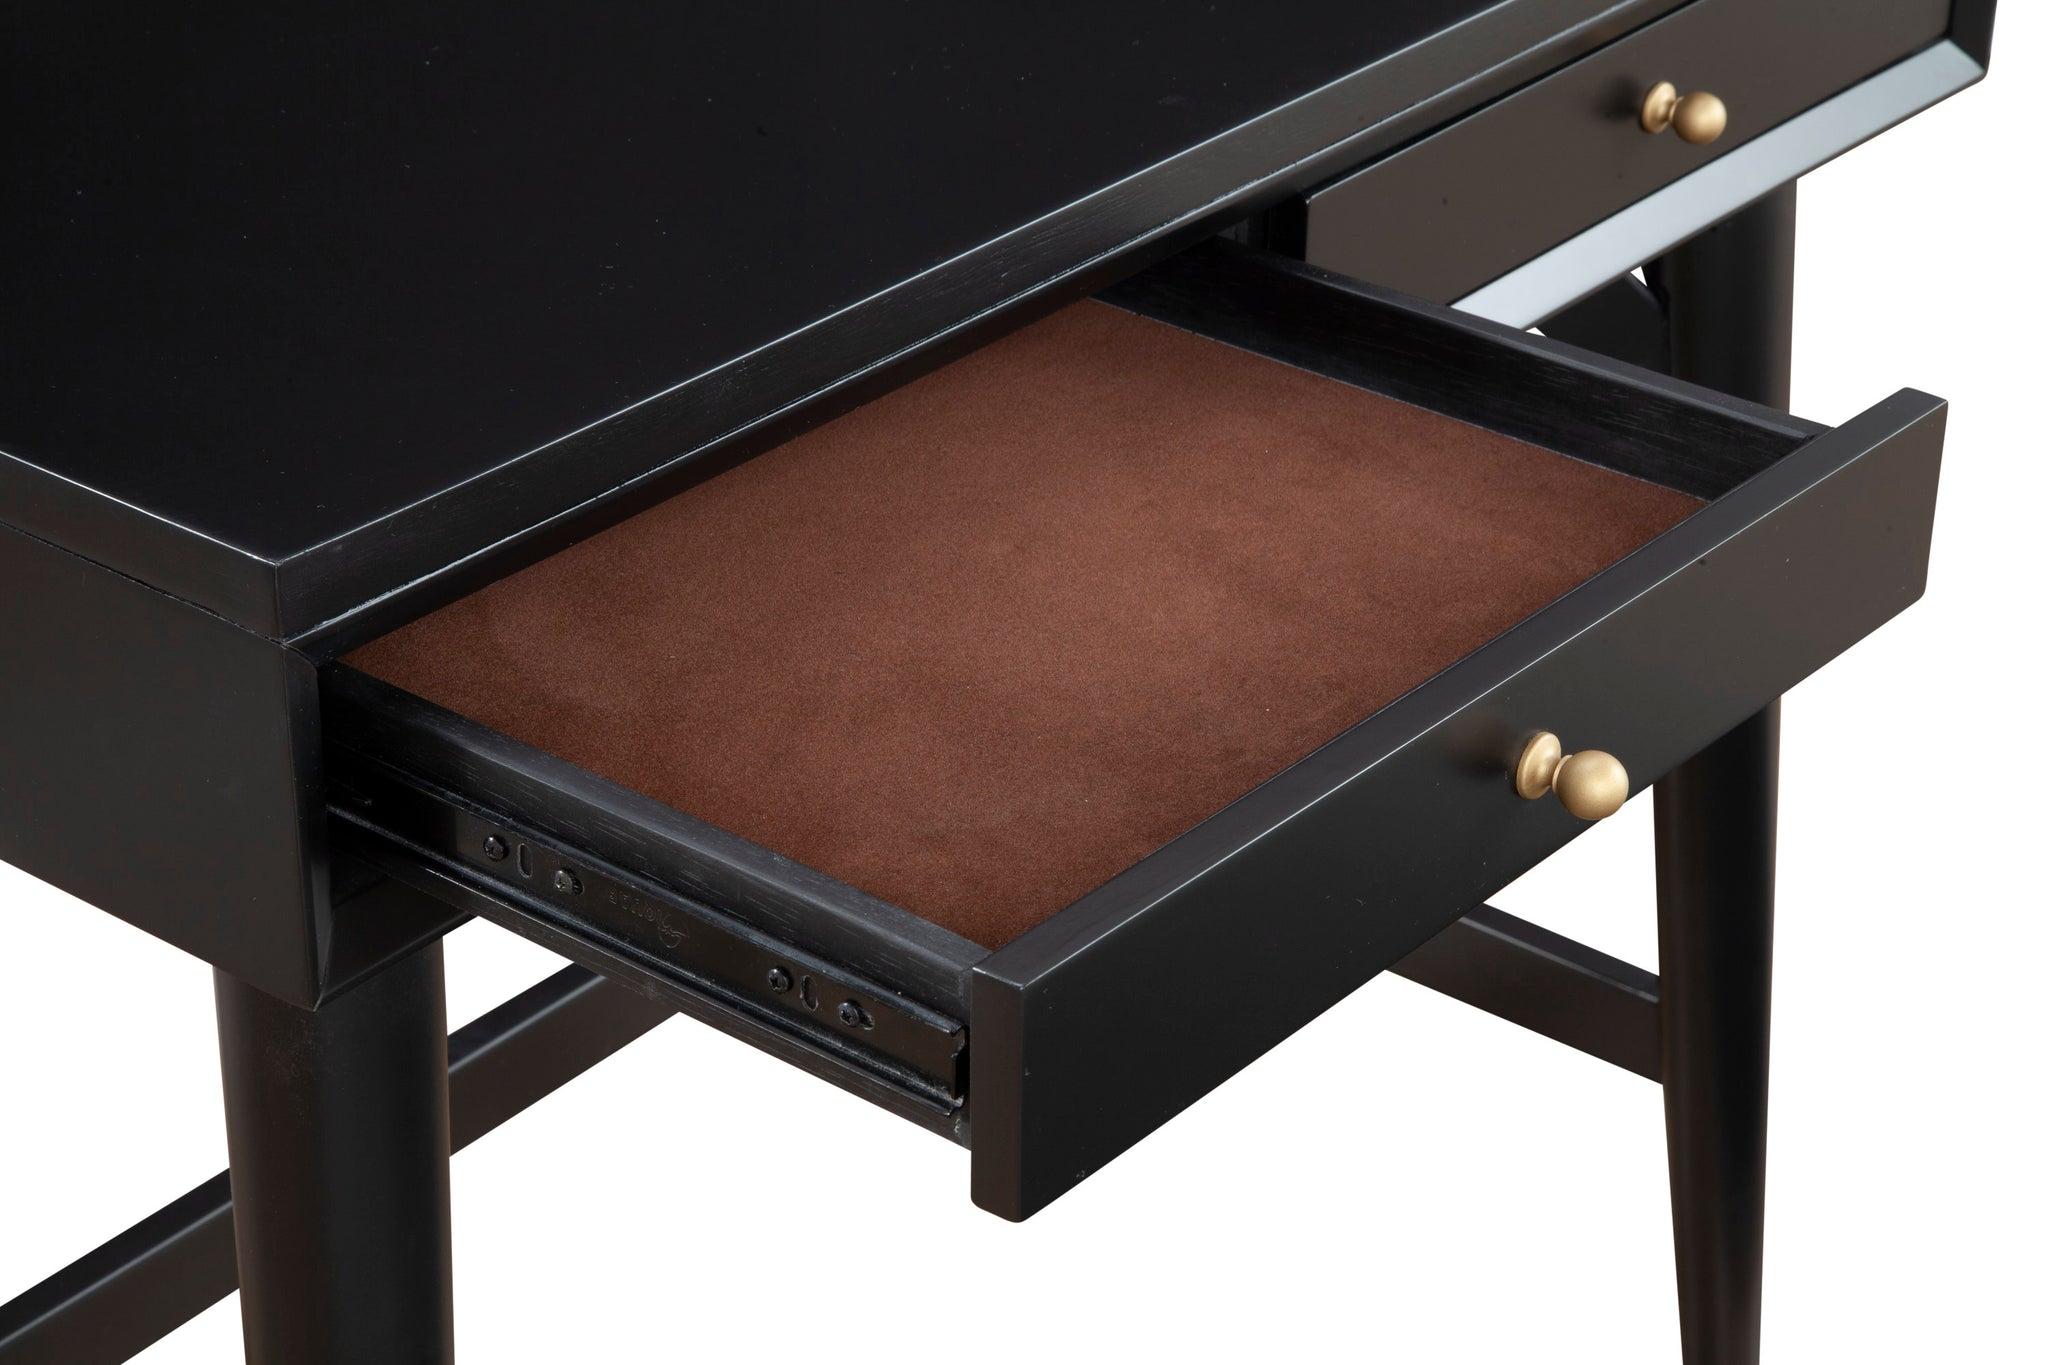 

    
966BLK-65 Alpine Furniture Desk
